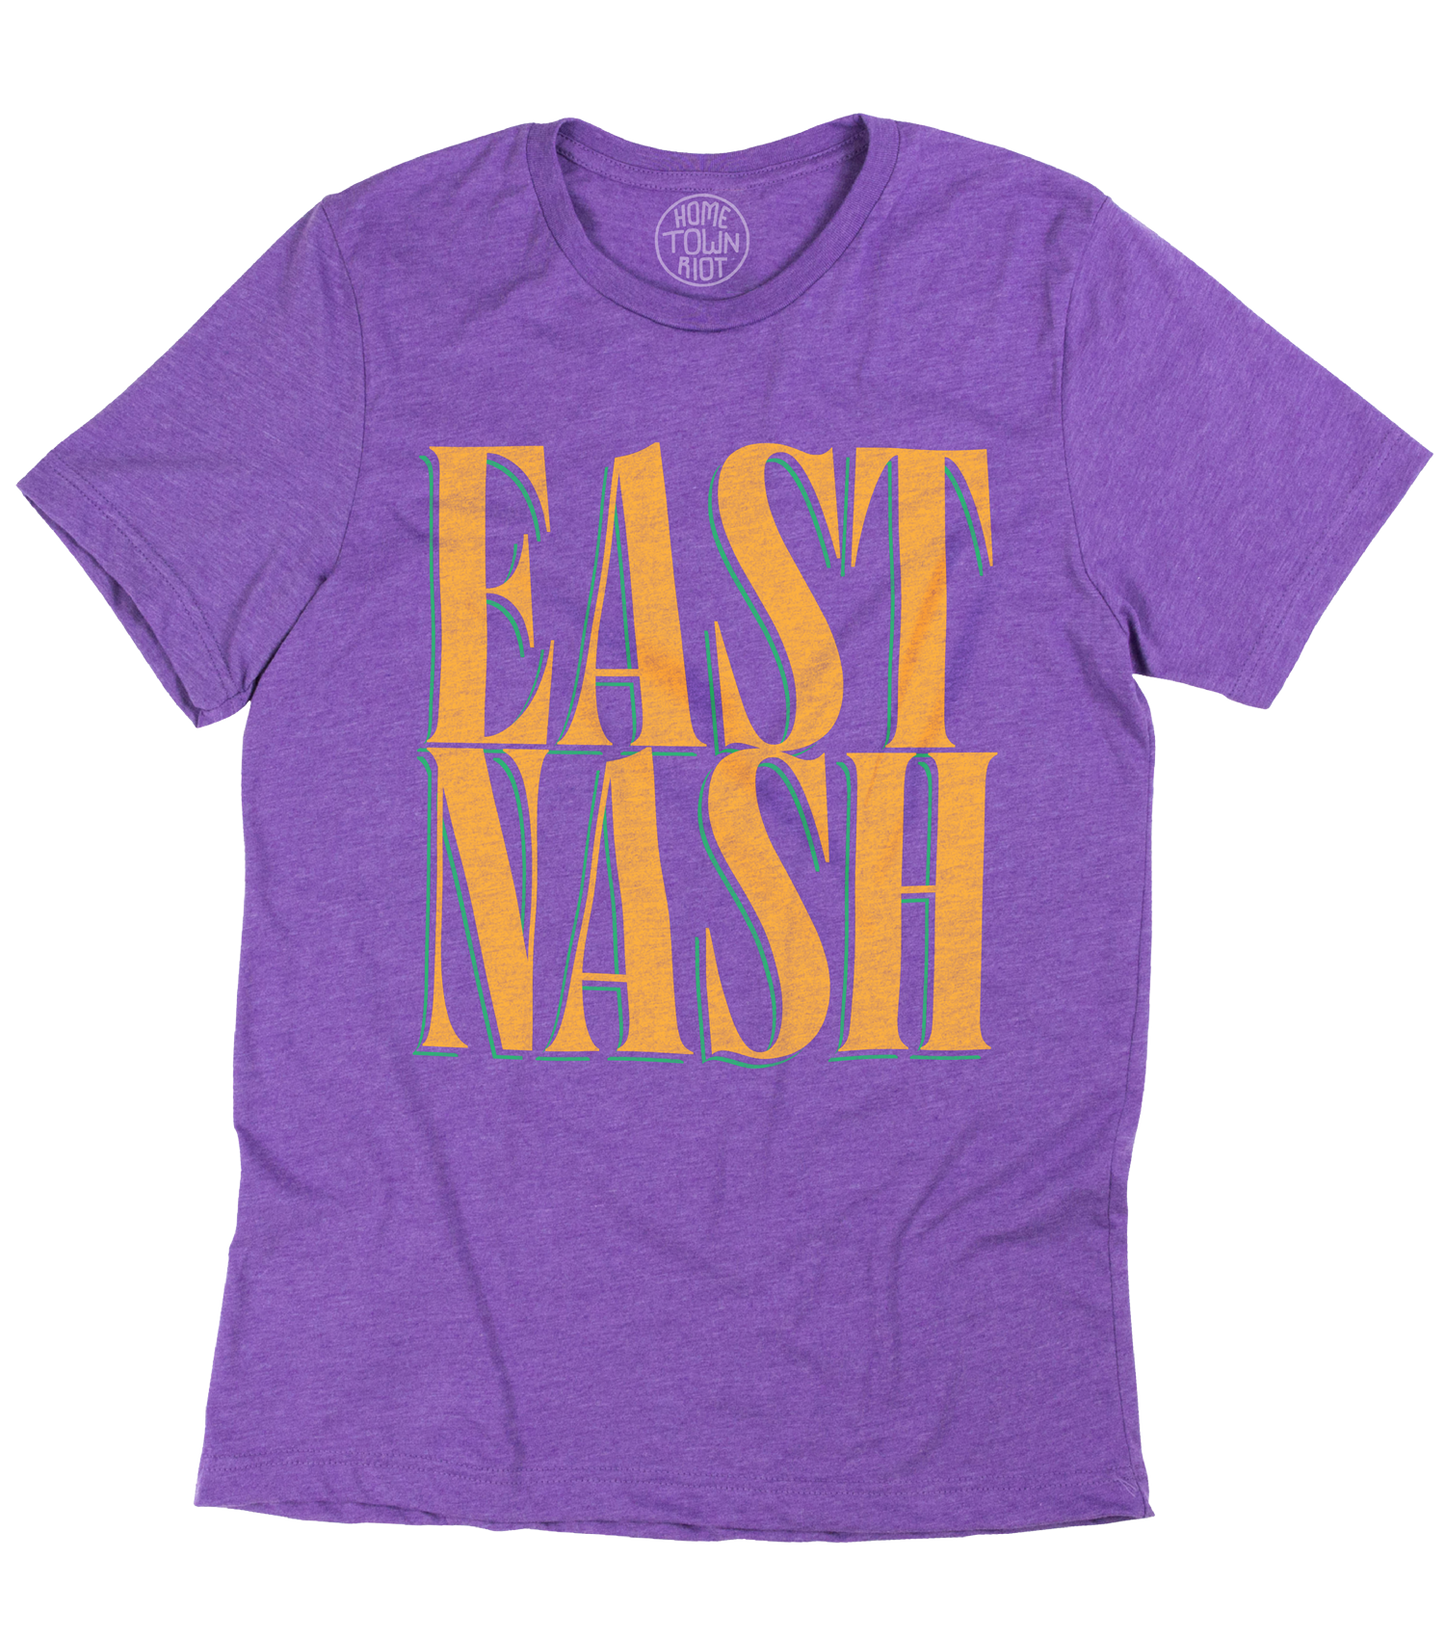 East Nash Shirt